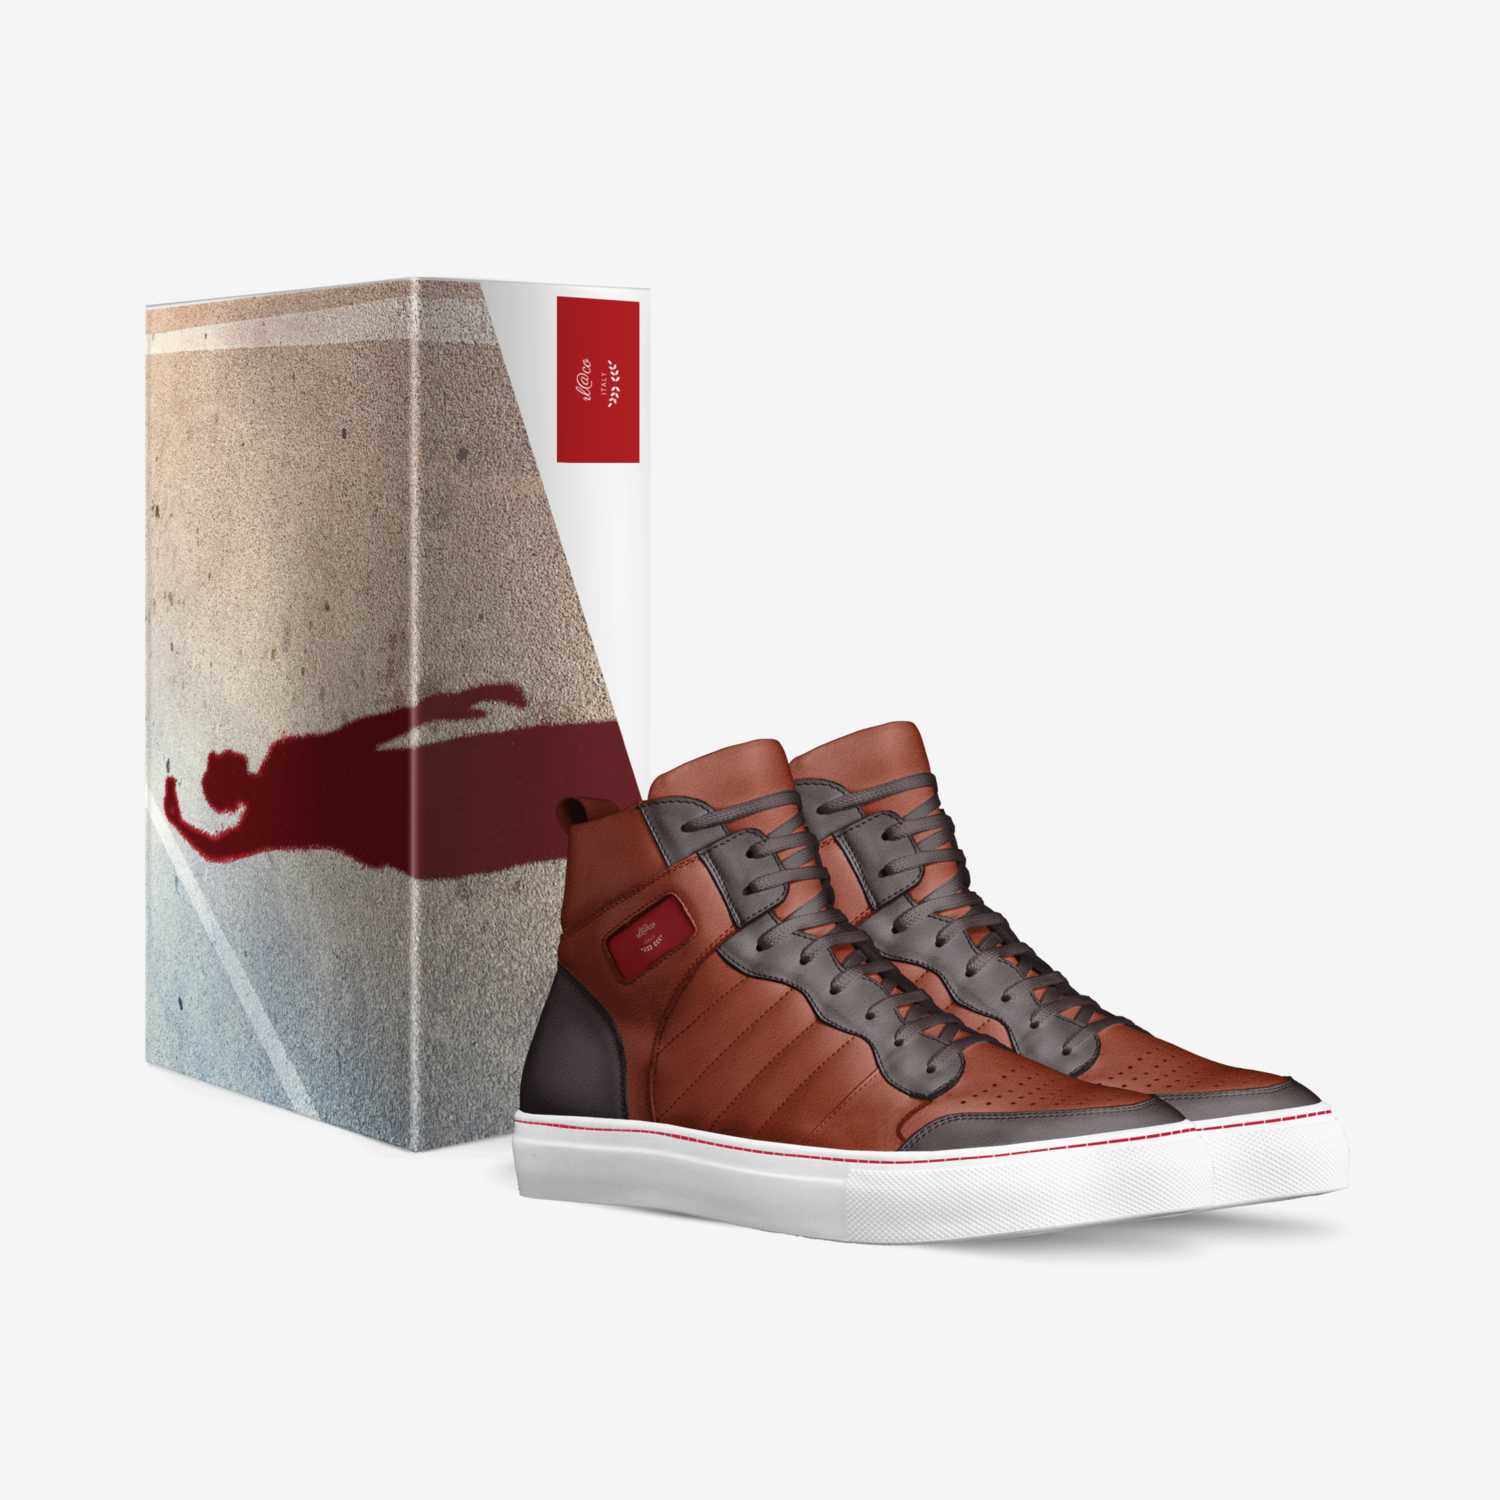 rl@co custom made in Italy shoes by Rashanda Lyons | Box view